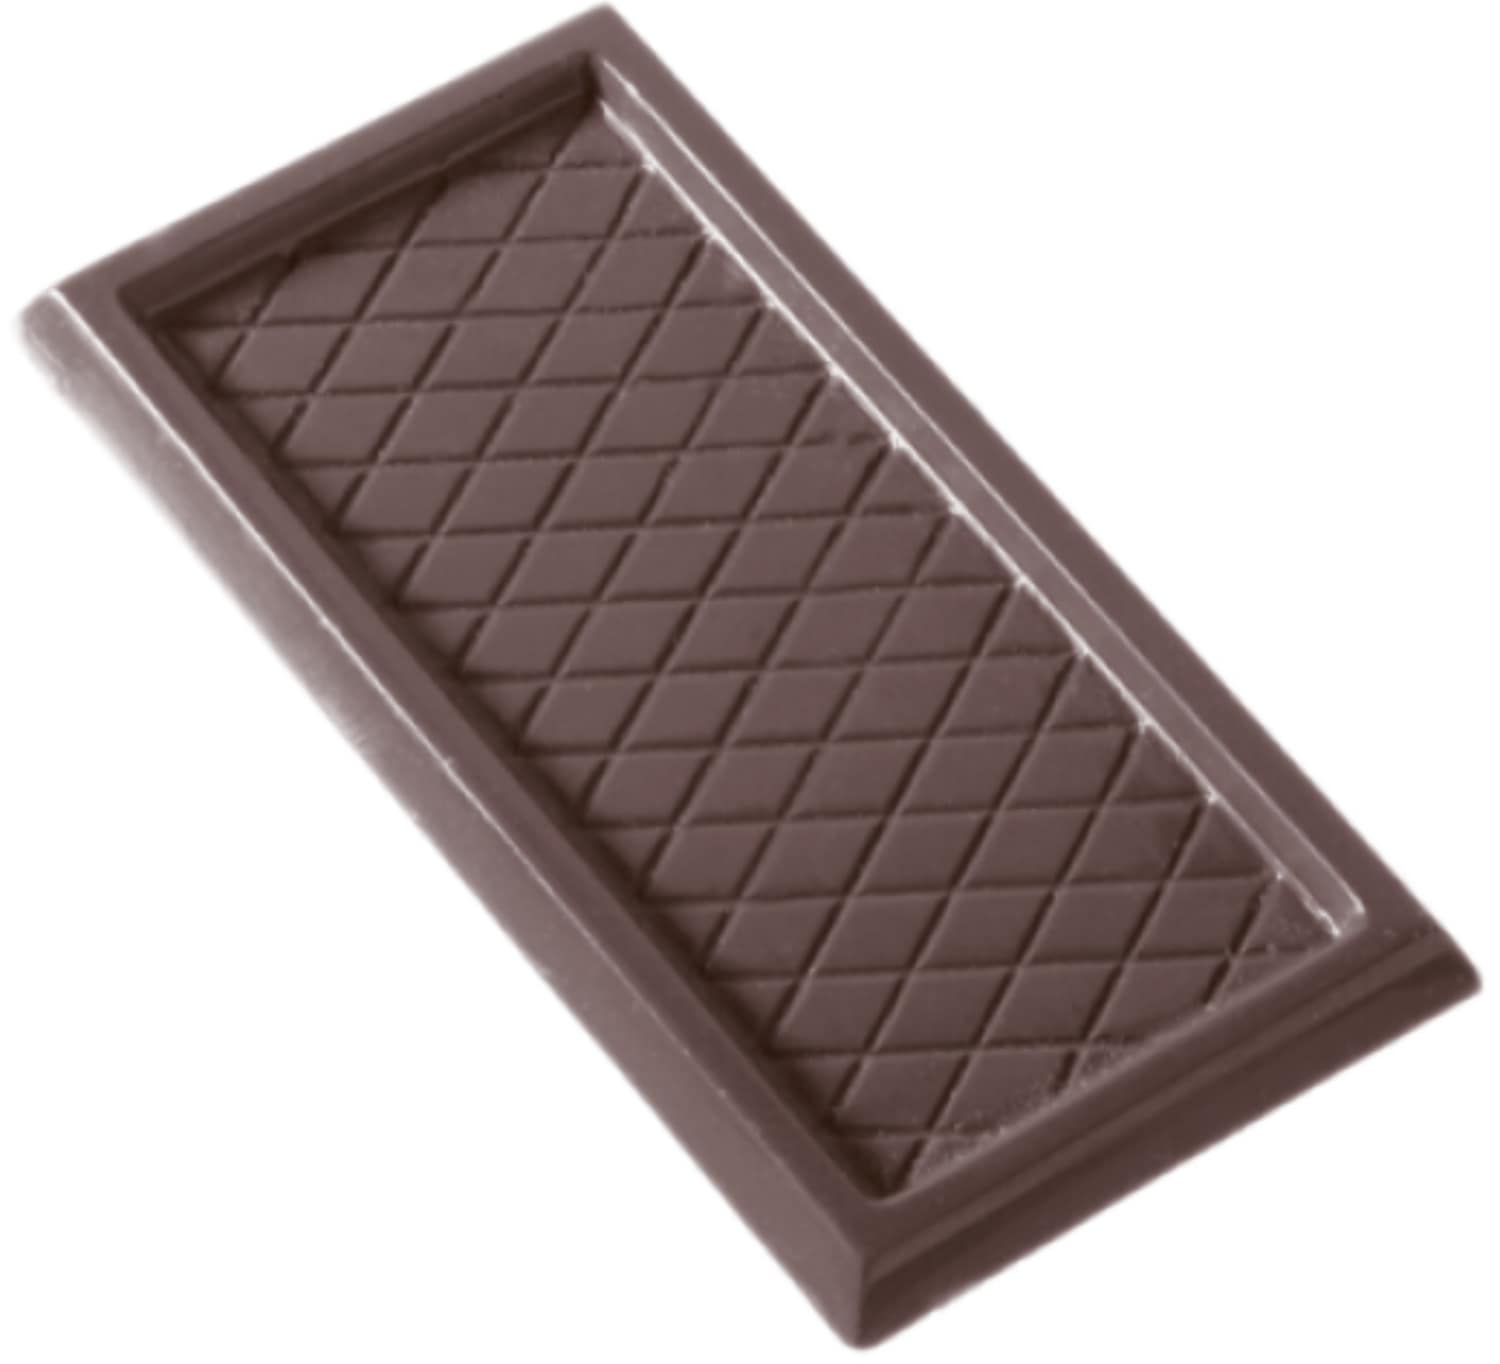 Schokoladenform "Keks" 422018